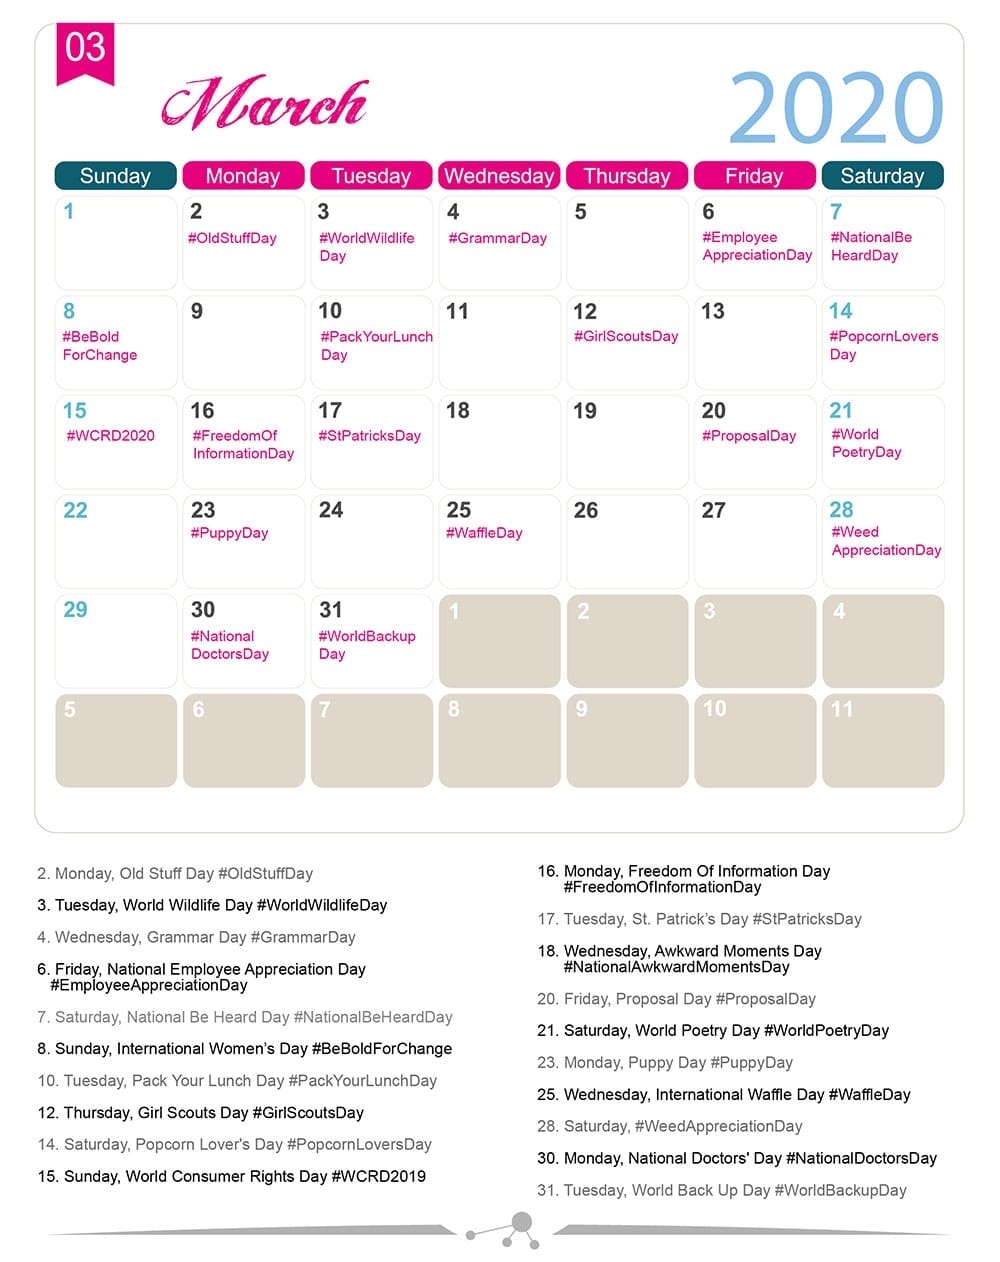 The 2020 Social Media Holiday Calendar - Make A Website Hub in Calendar With All Special Days 2020